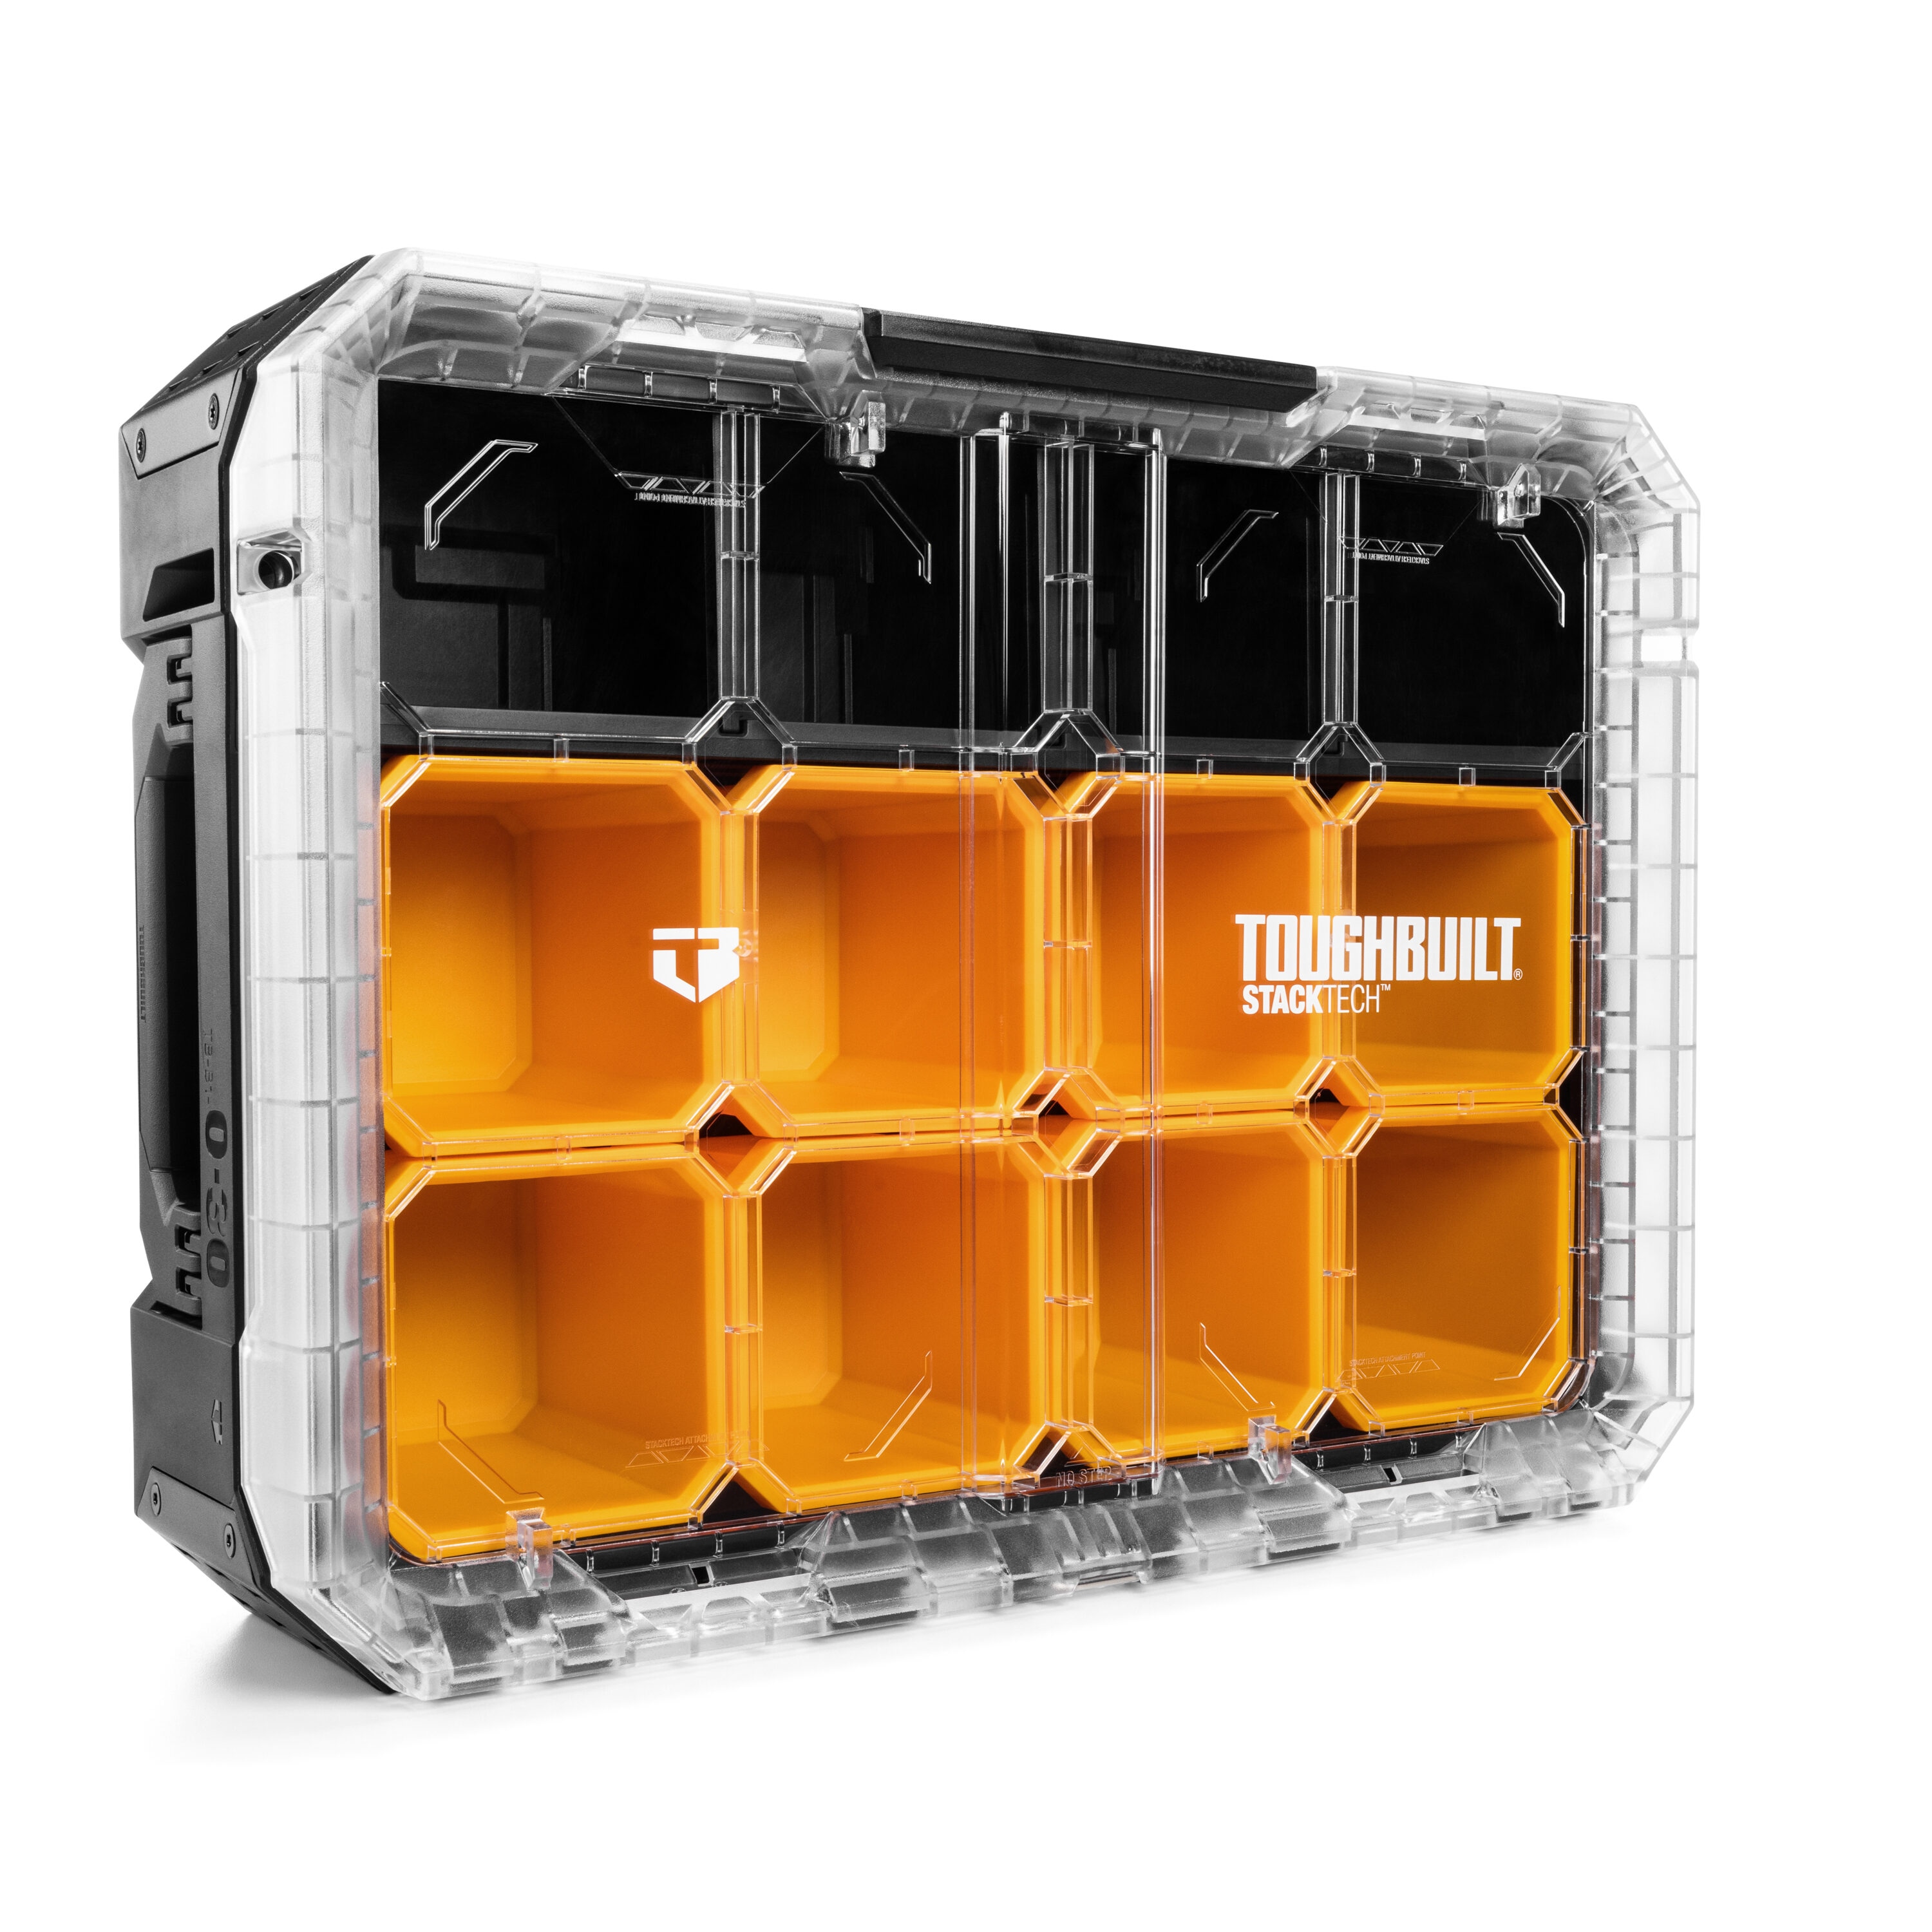 TOUGHBUILT STACKTECH Compact Low-Profile 12-Compartment Plastic